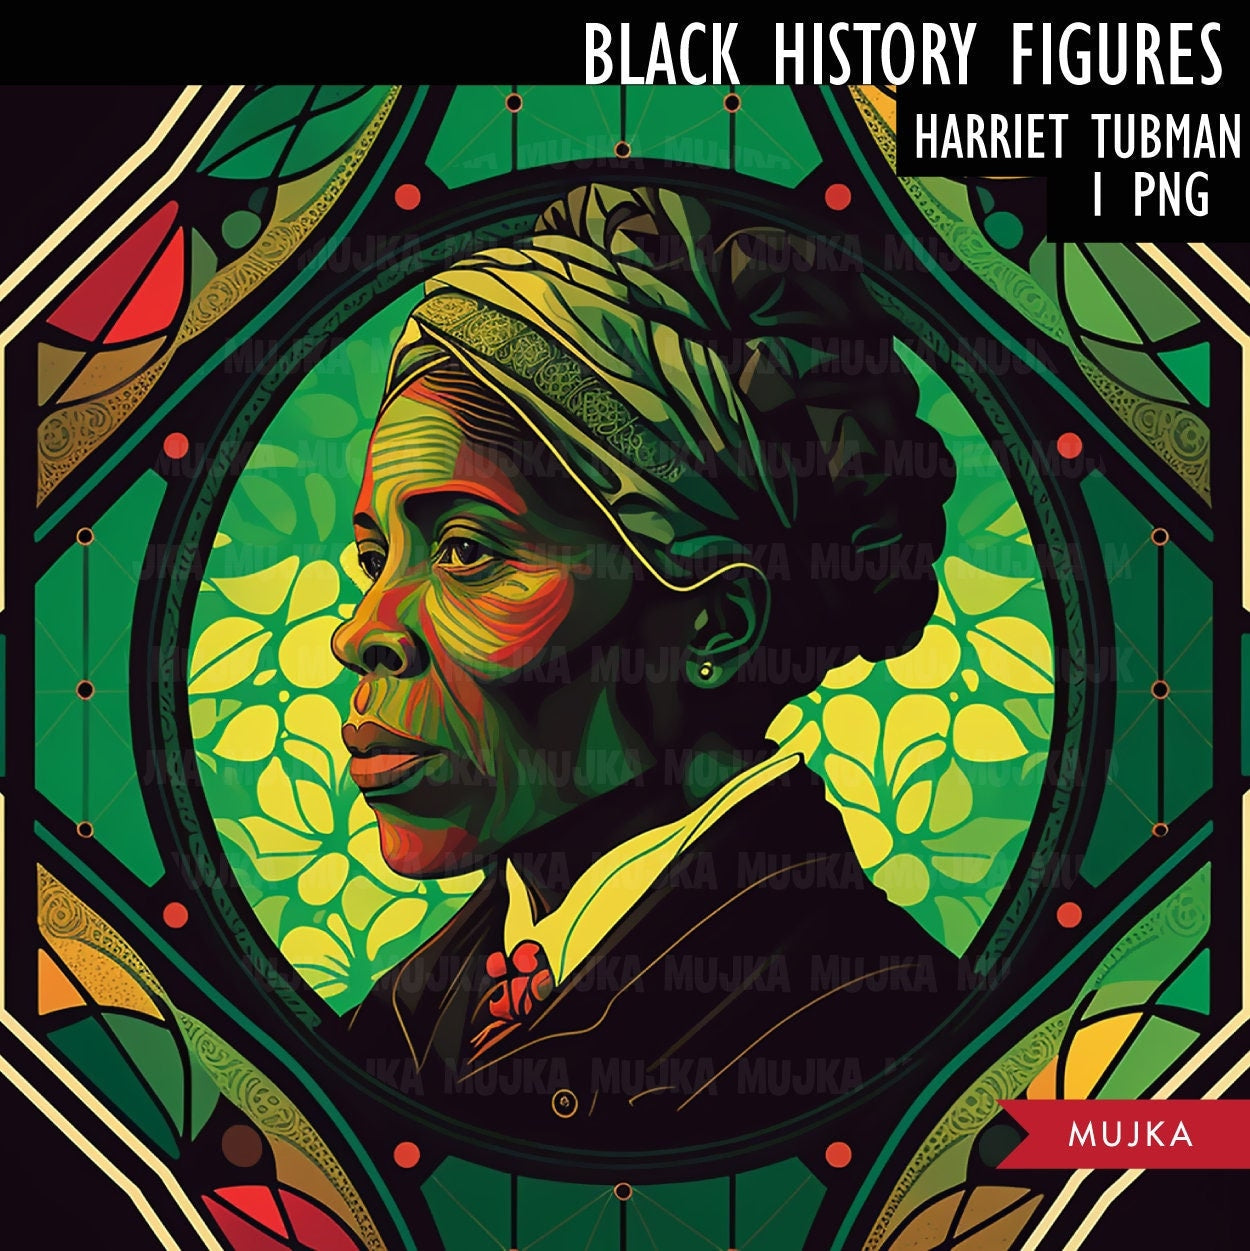 Black History PNG, Harriet Tubman poster, Black History Cards, printable Black History Art, Black History wall art, sublimation design